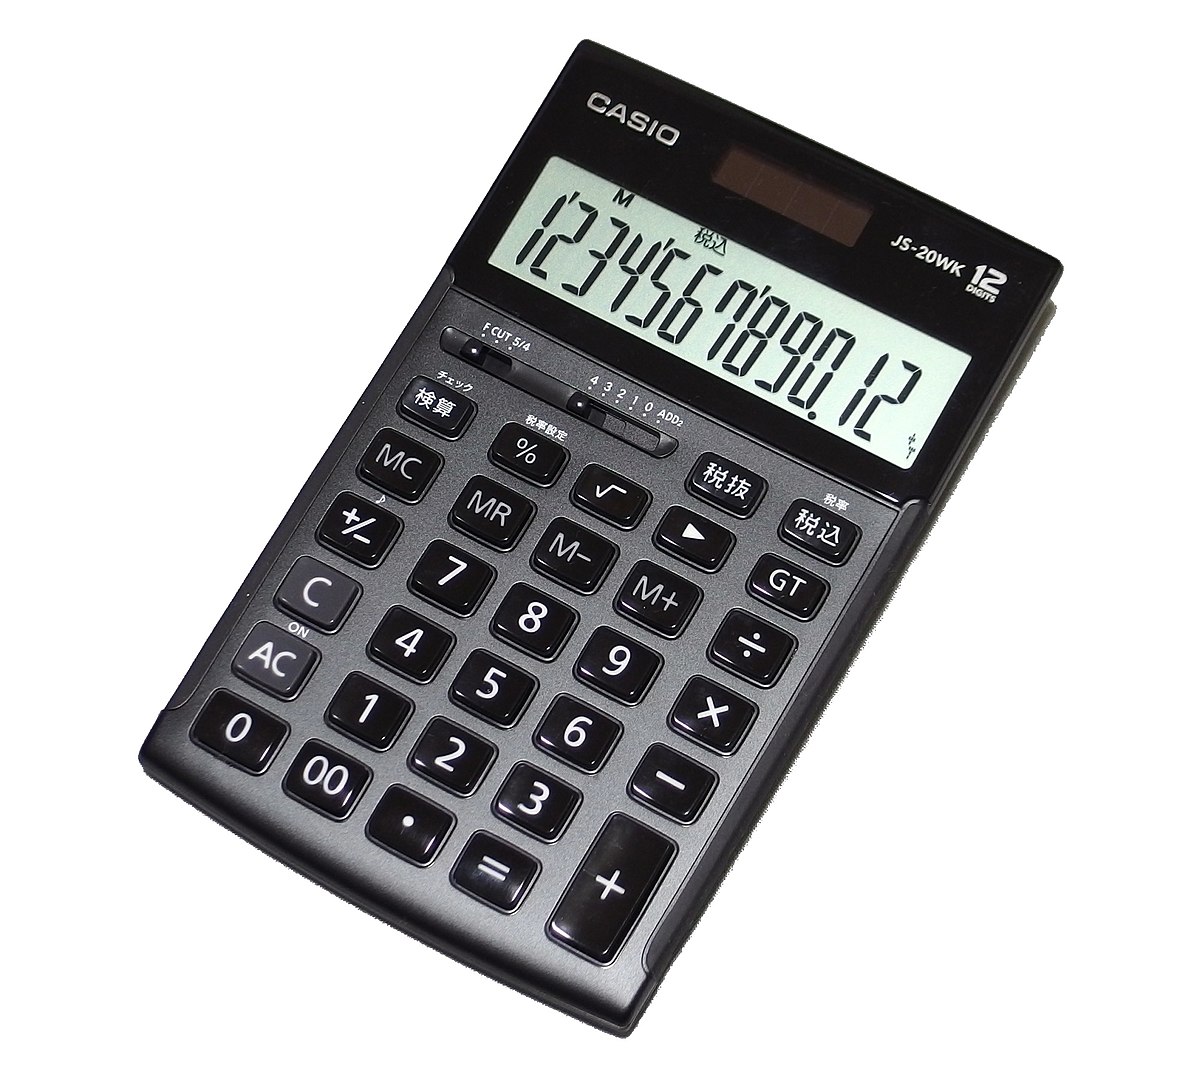 Calculator.com